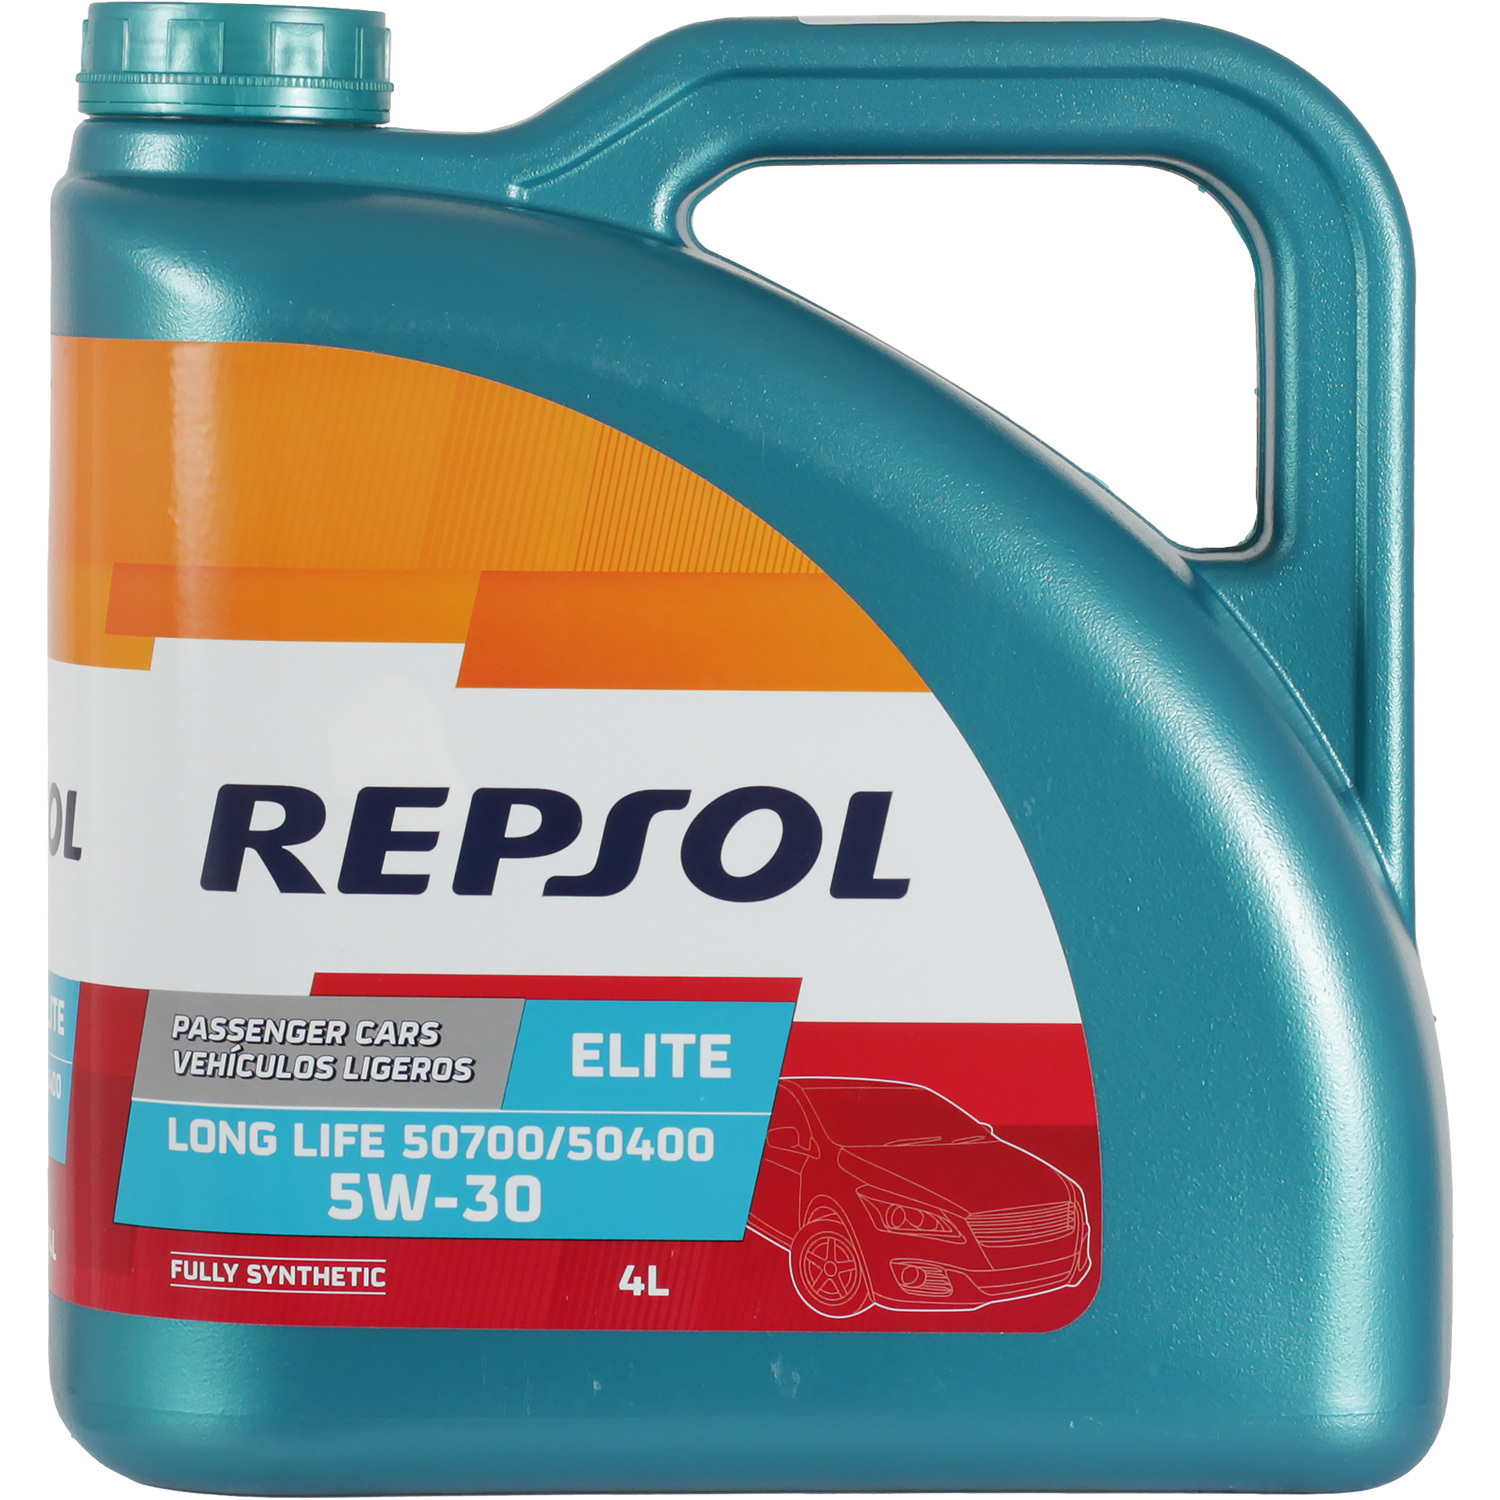 Repsol Масло моторное Repsol ELITE LONG LIFE 50700/50400 5W-30 4л масло моторное repsol 5 30 elite long life 50700 50400 rp синтетическое 1 л